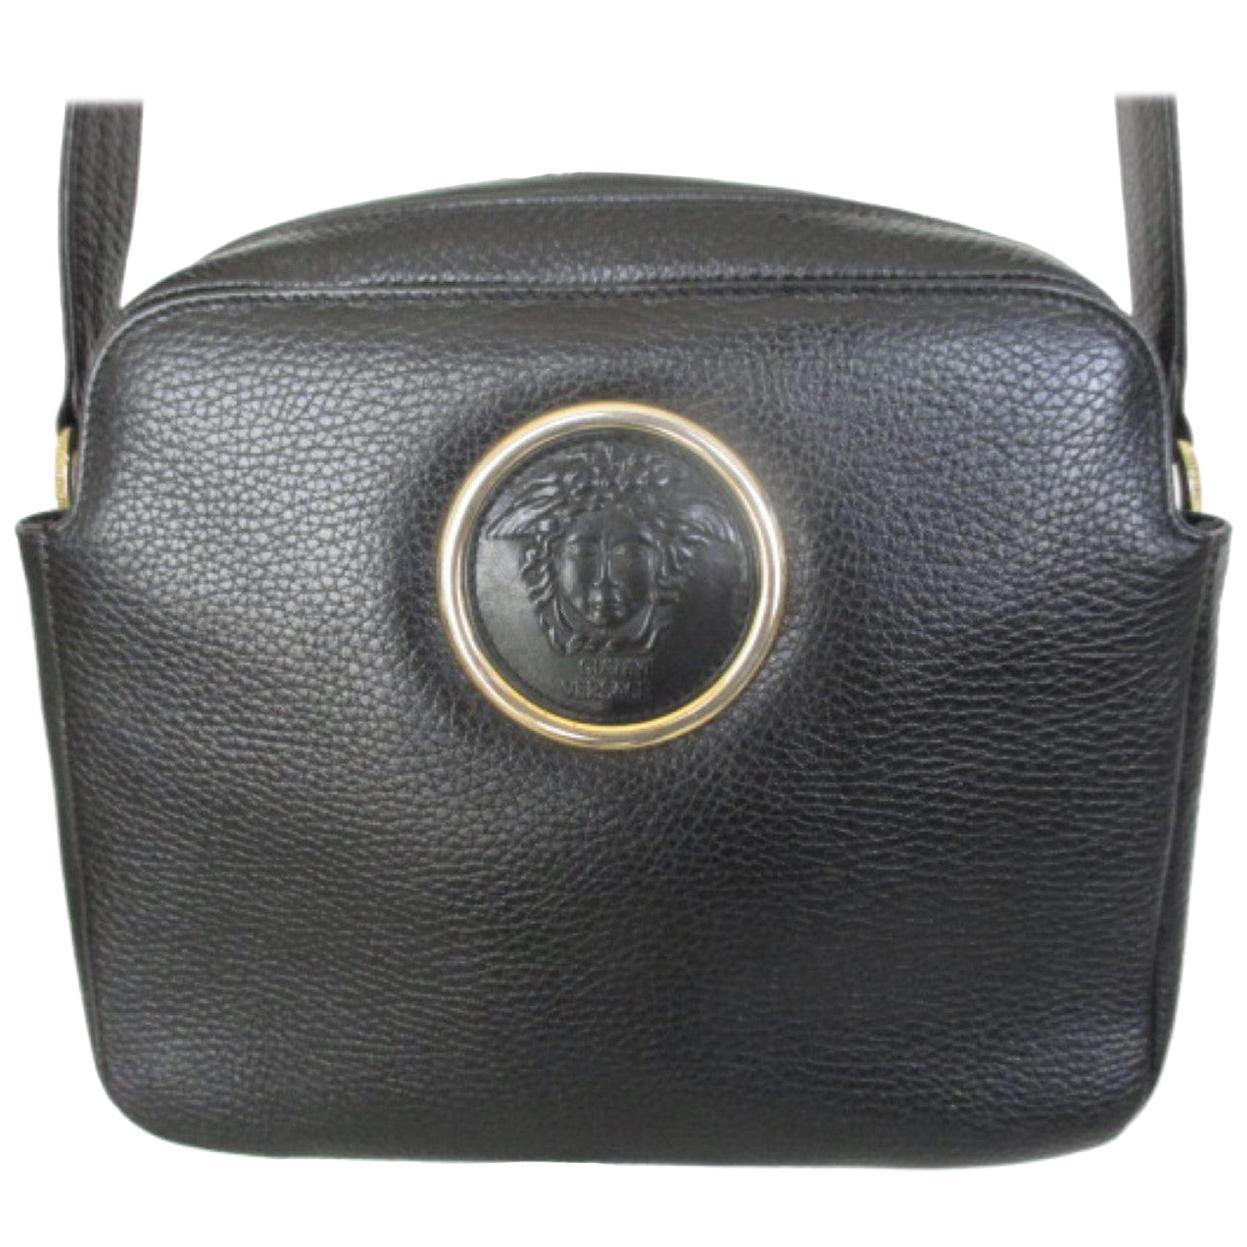 Gianni Versace Medusa Black bag For Sale